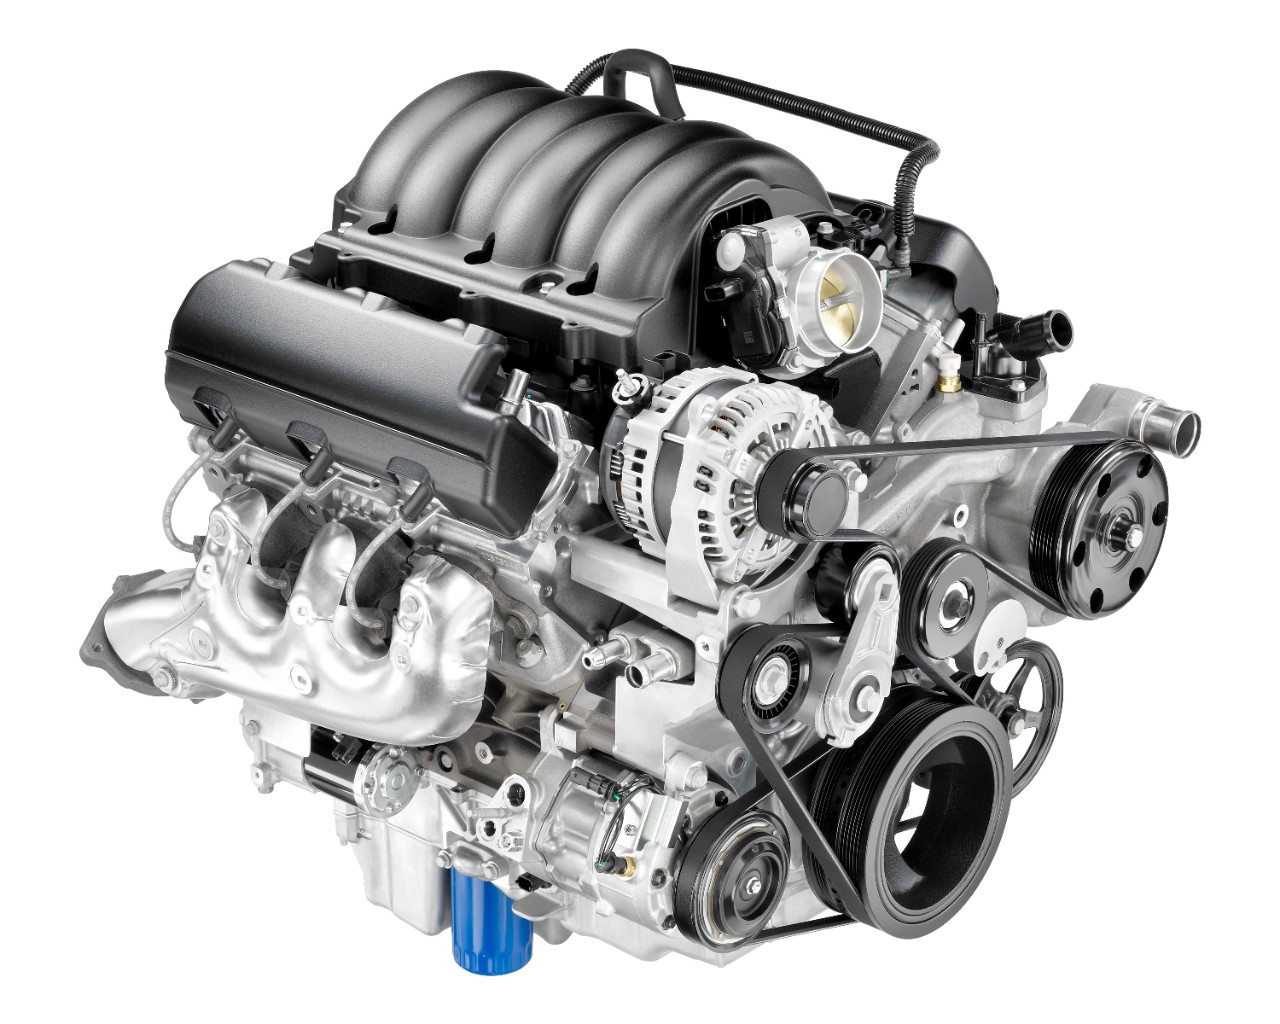 GM Shelves Vortec Engine Family Name, Introduces "EcoTec3" Family In